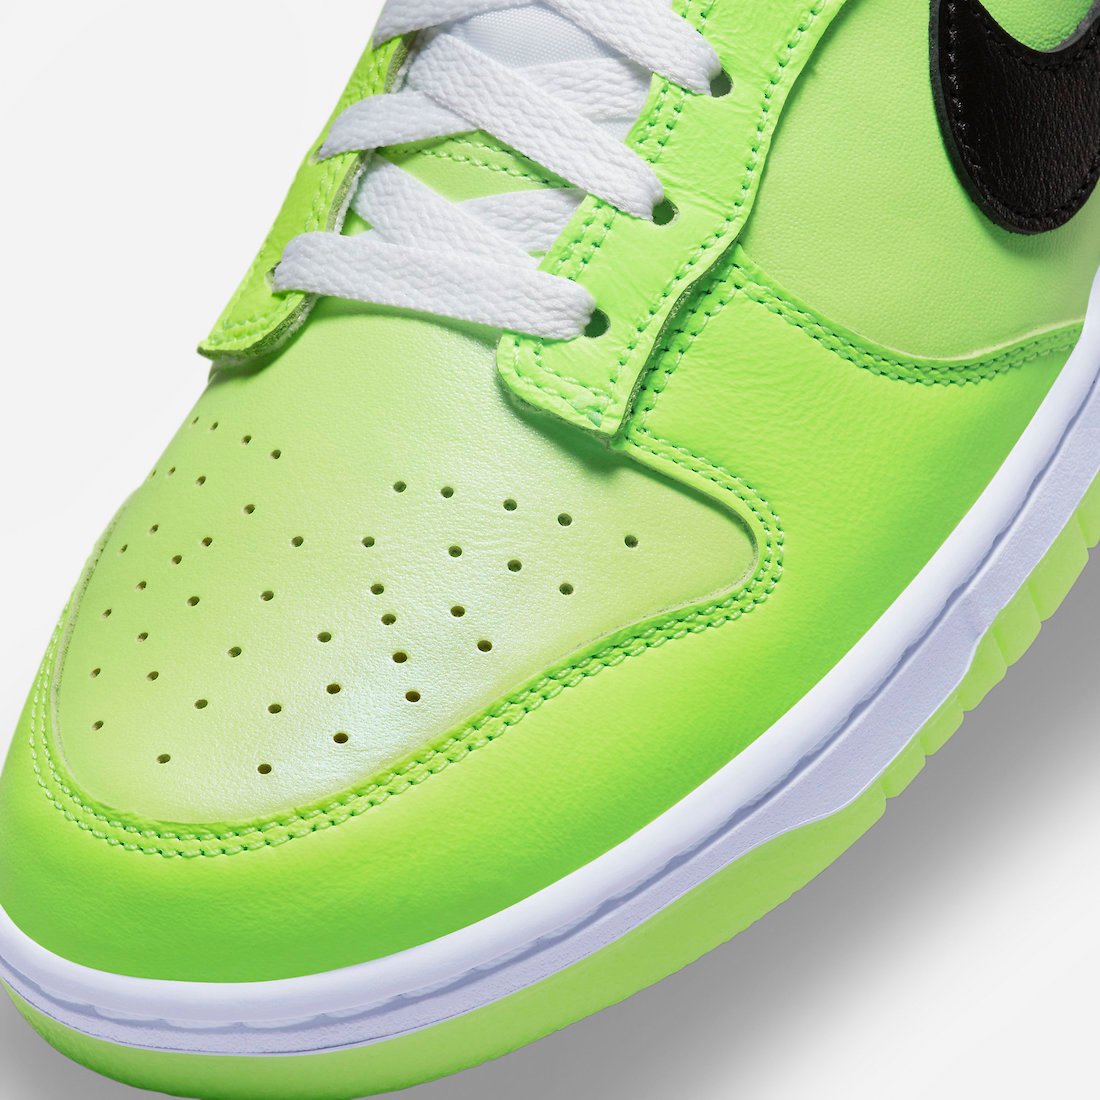 Nike-Dunk-Low-Volt-Glow-in-the-Dark-Release-Date-8